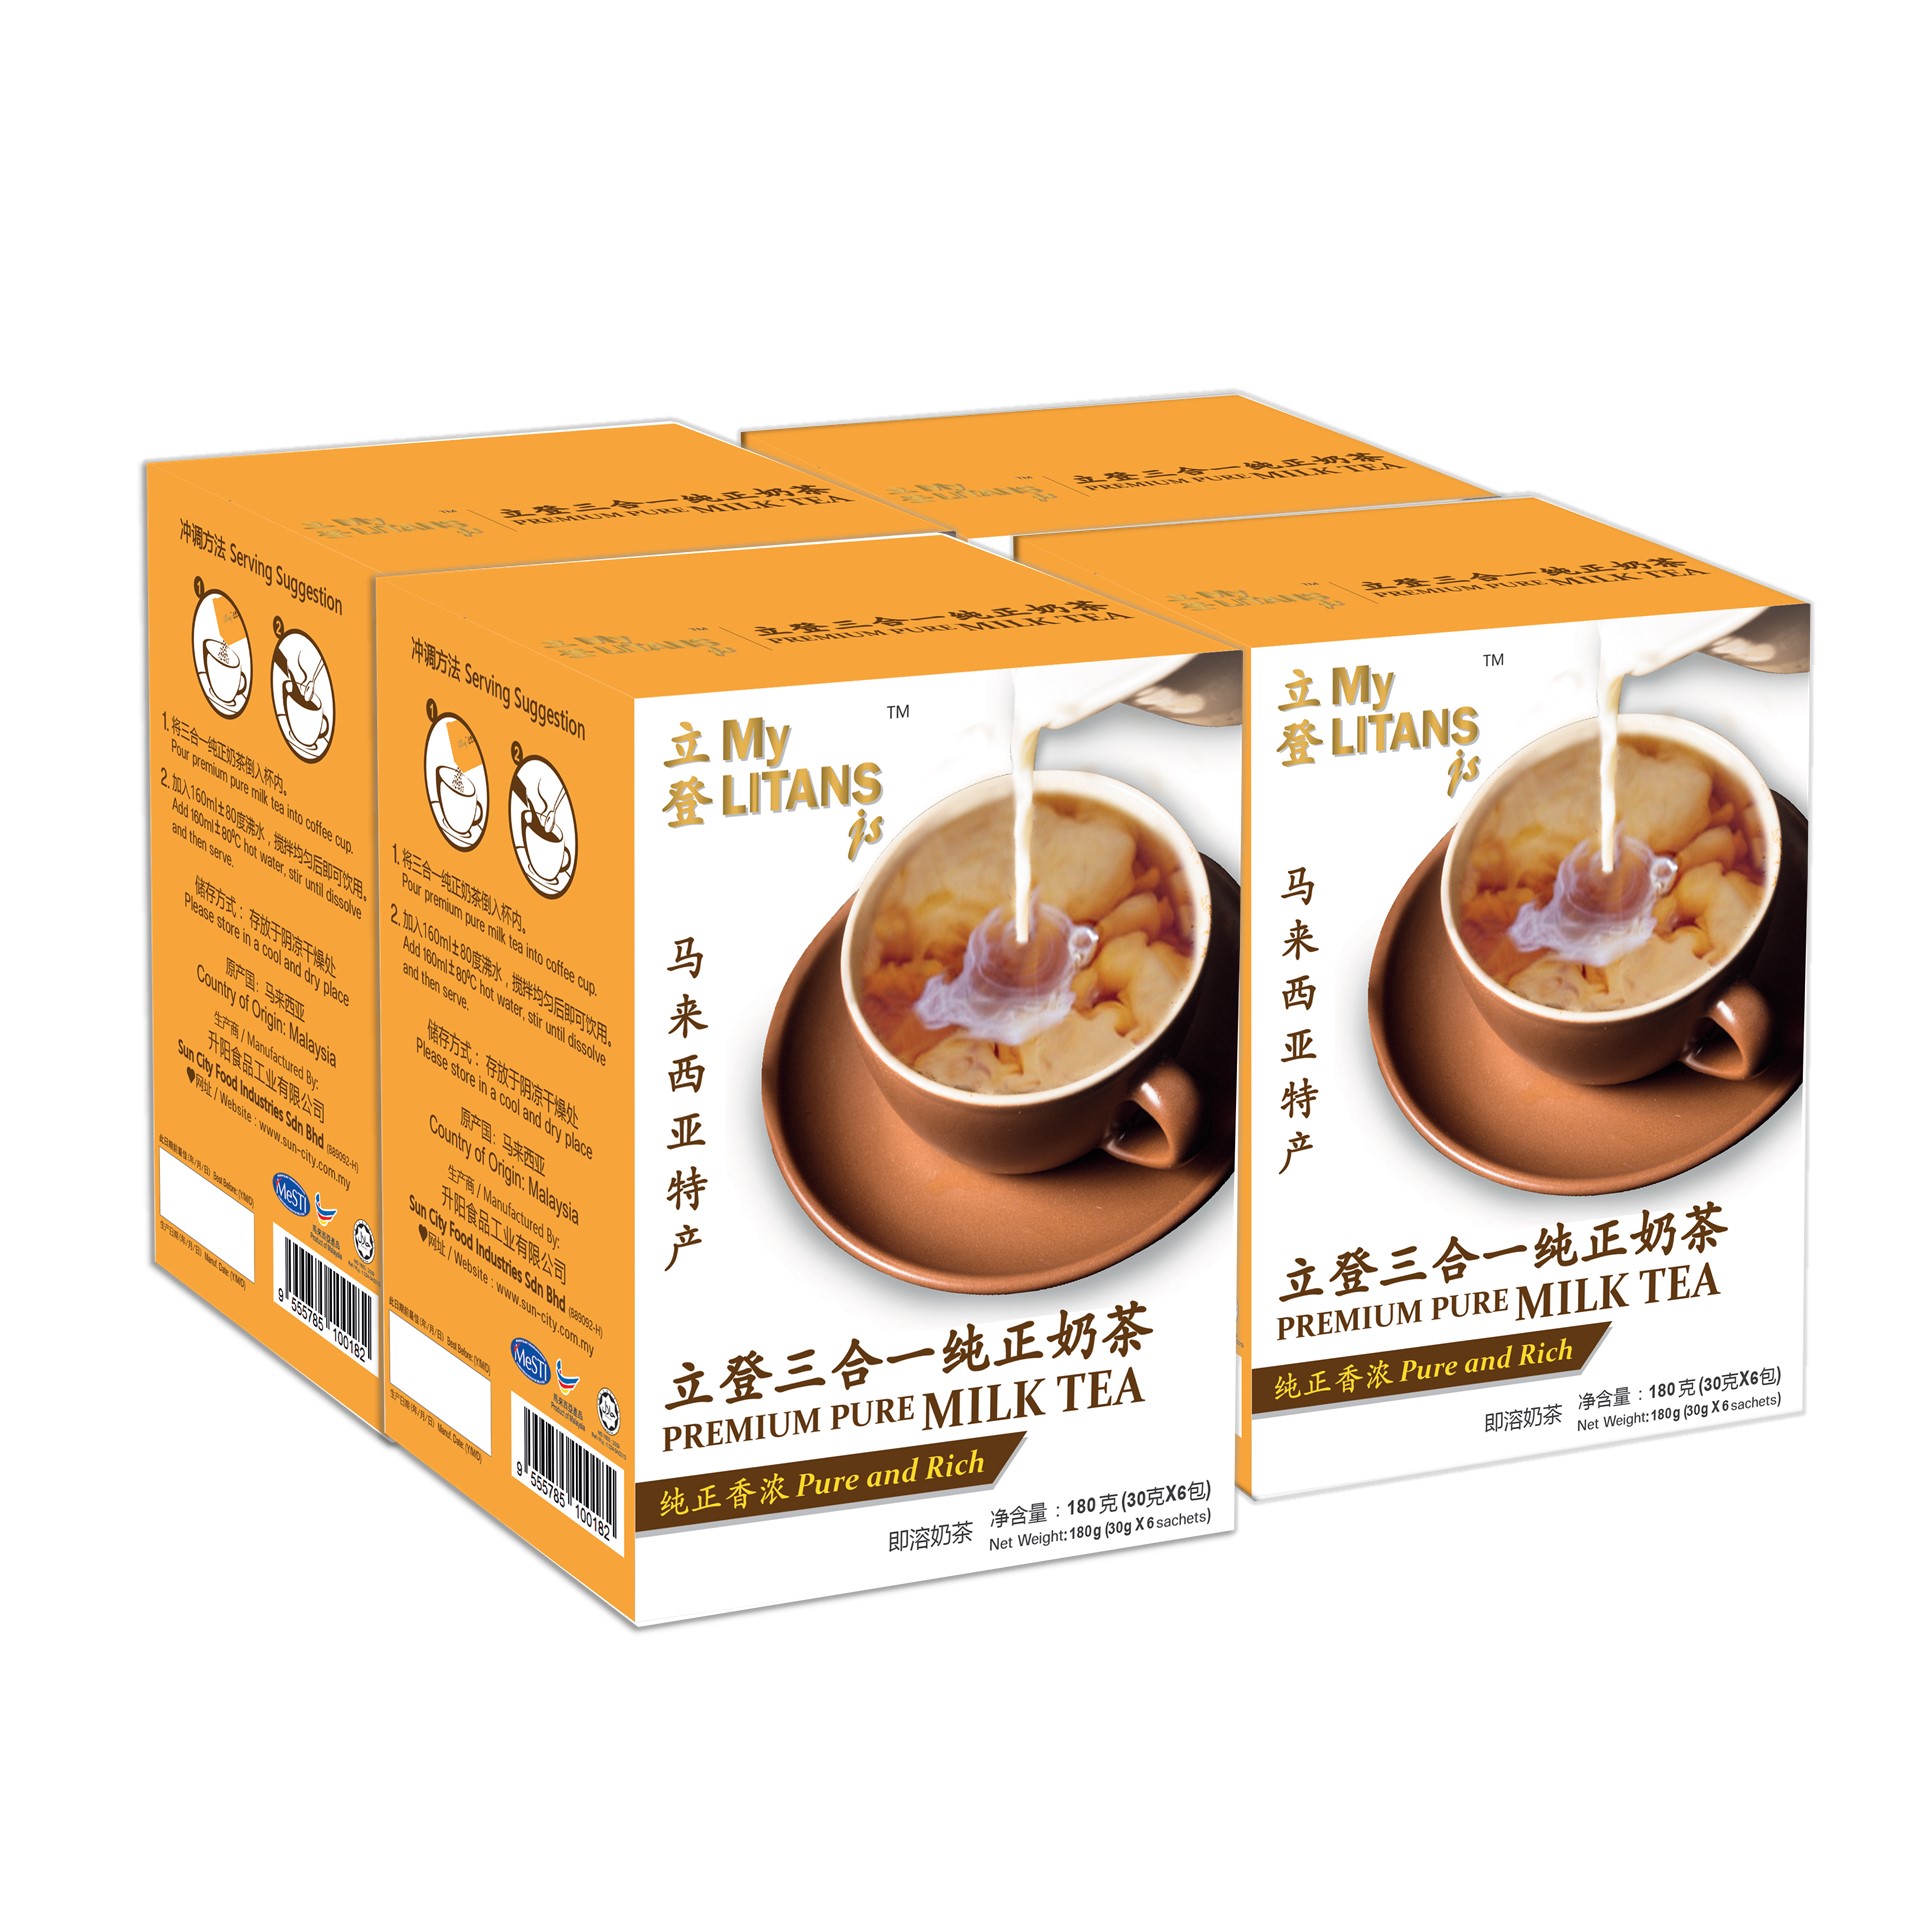 MyLITANSjs Premium 3 in 1 Pure Milk Tea 4 box (30 g x 6 sachets)